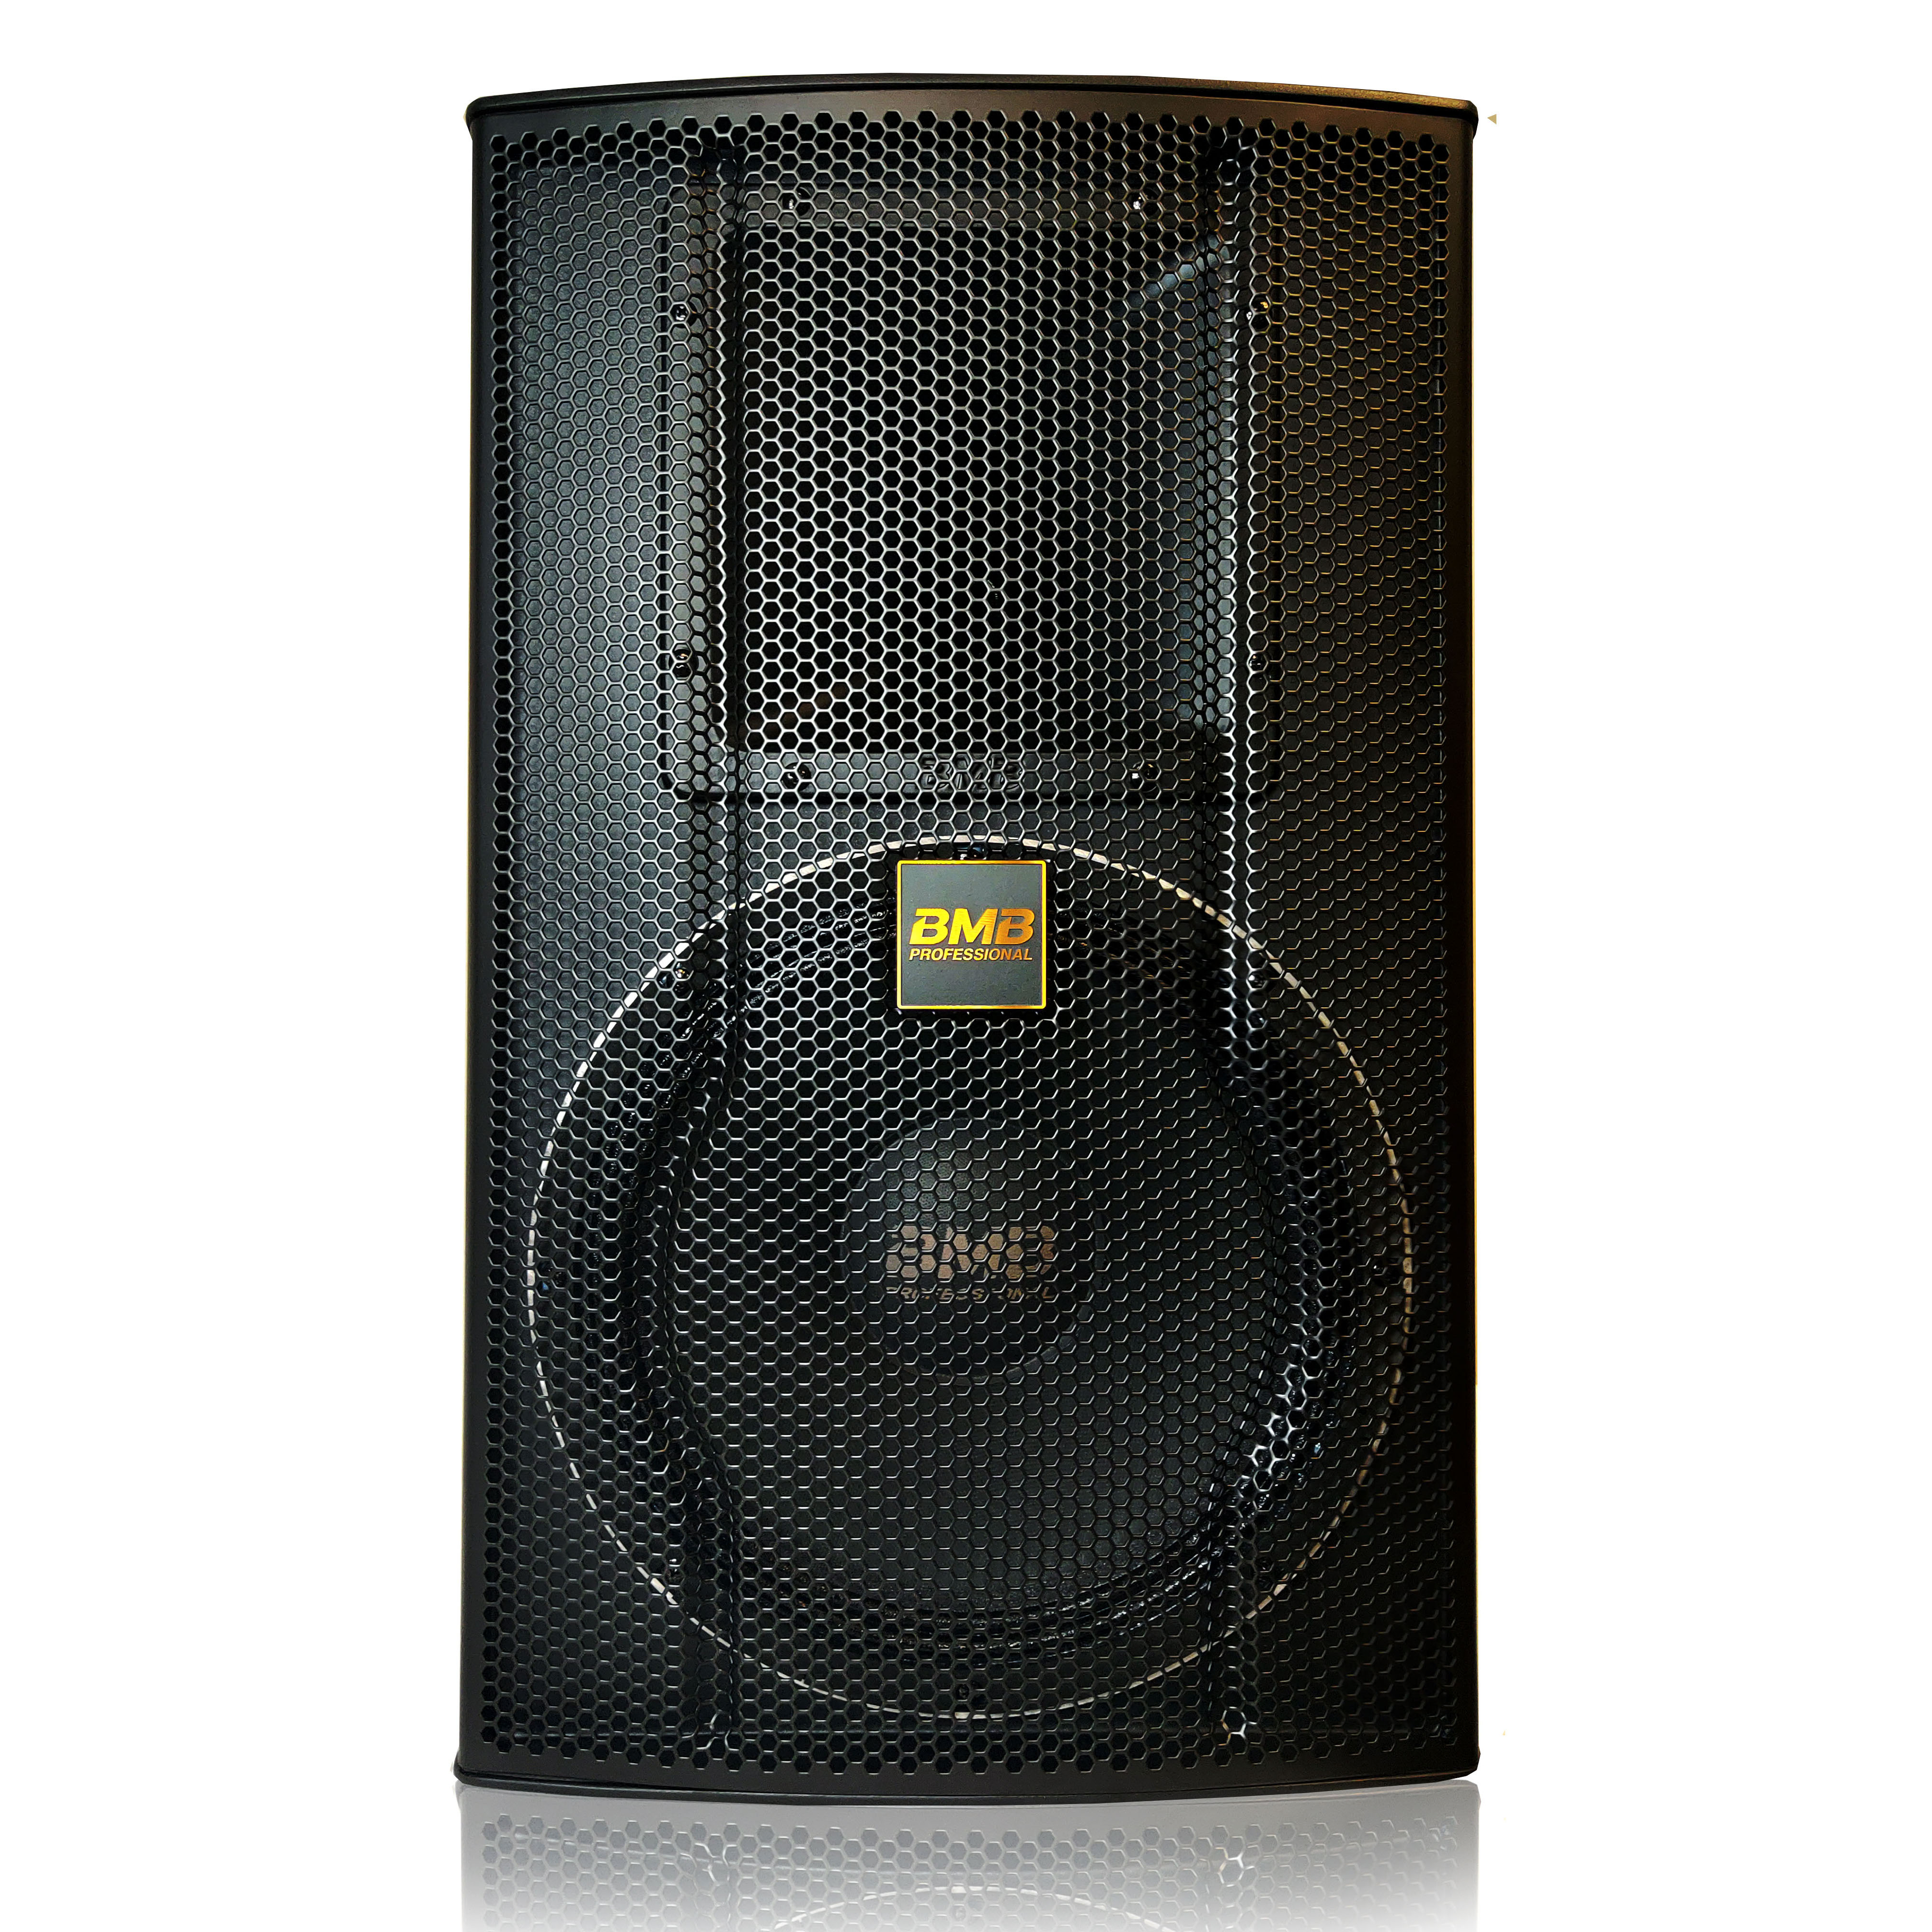 CSS-2010 1,200W Bass Reflex Speakers